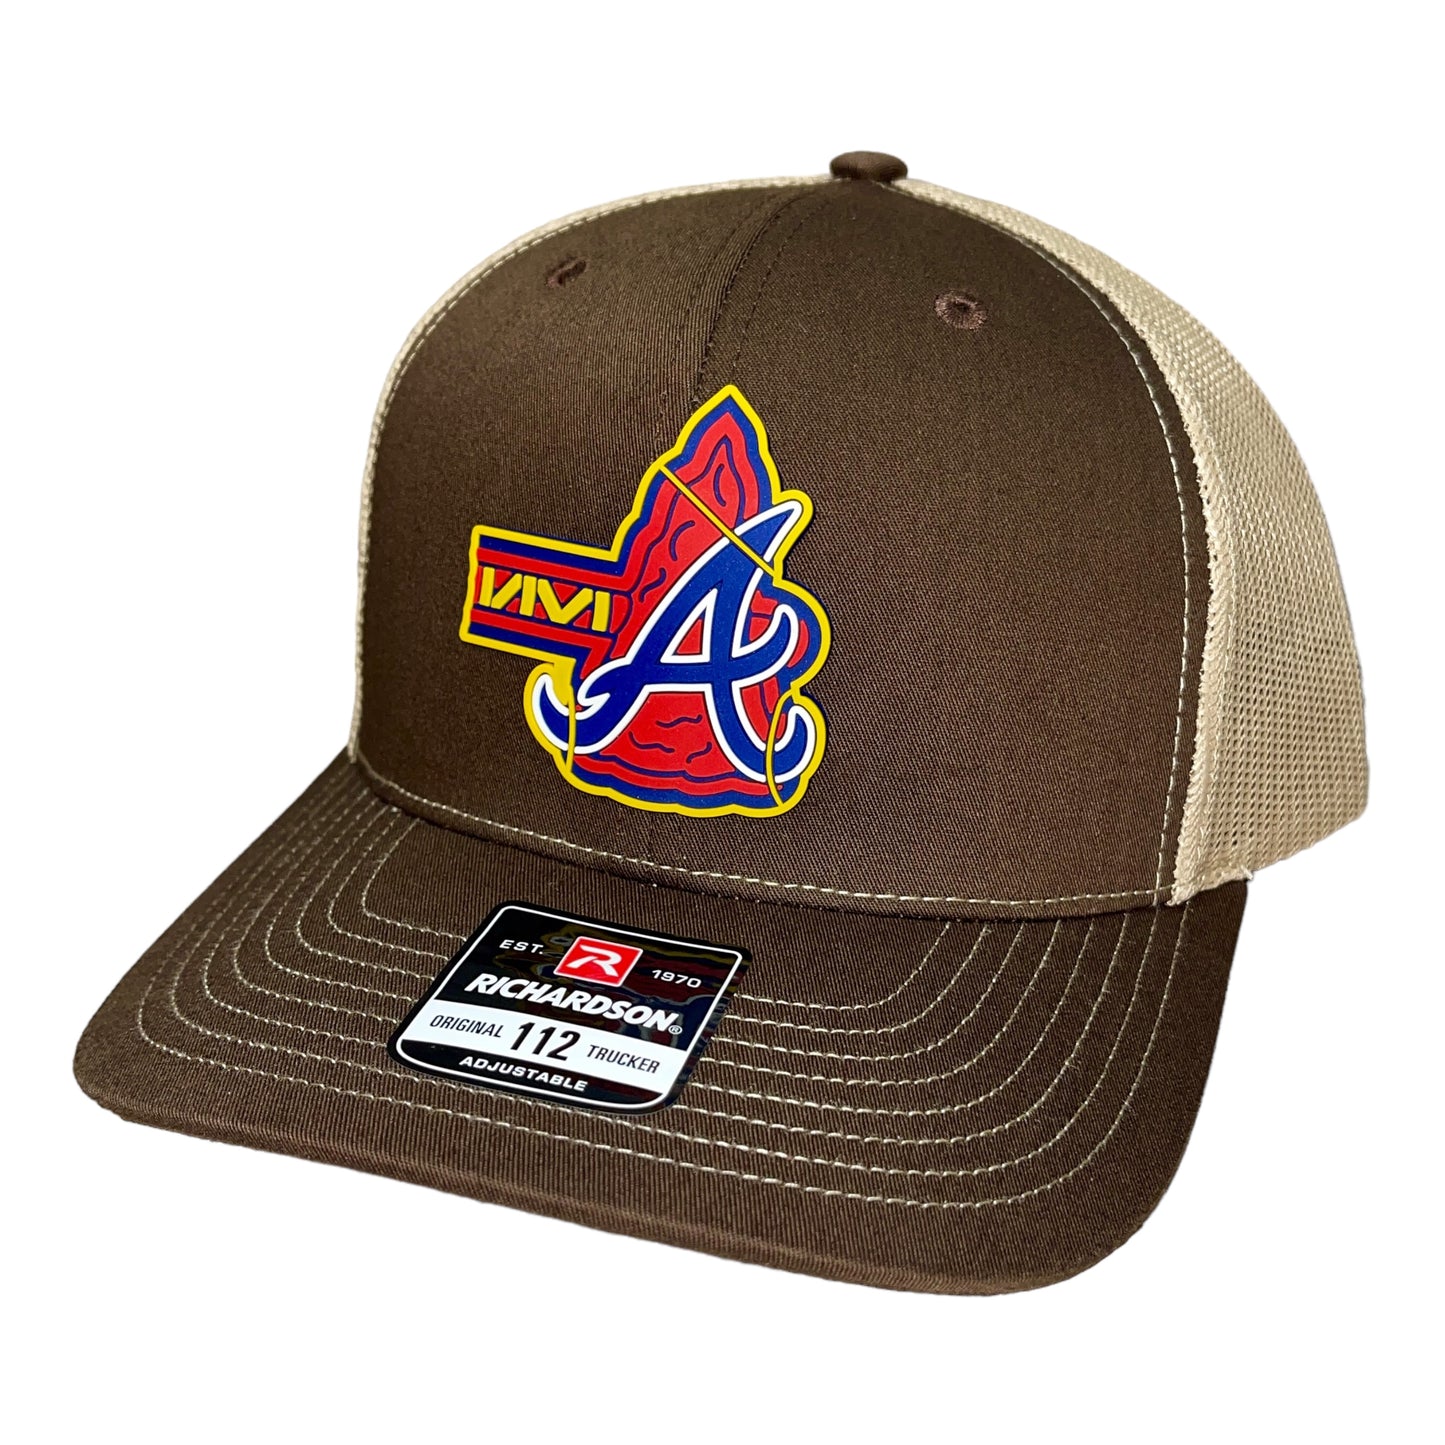 Atlanta Braves Tomahawk 3D Snapback Trucker Hat- Brown/ Tan